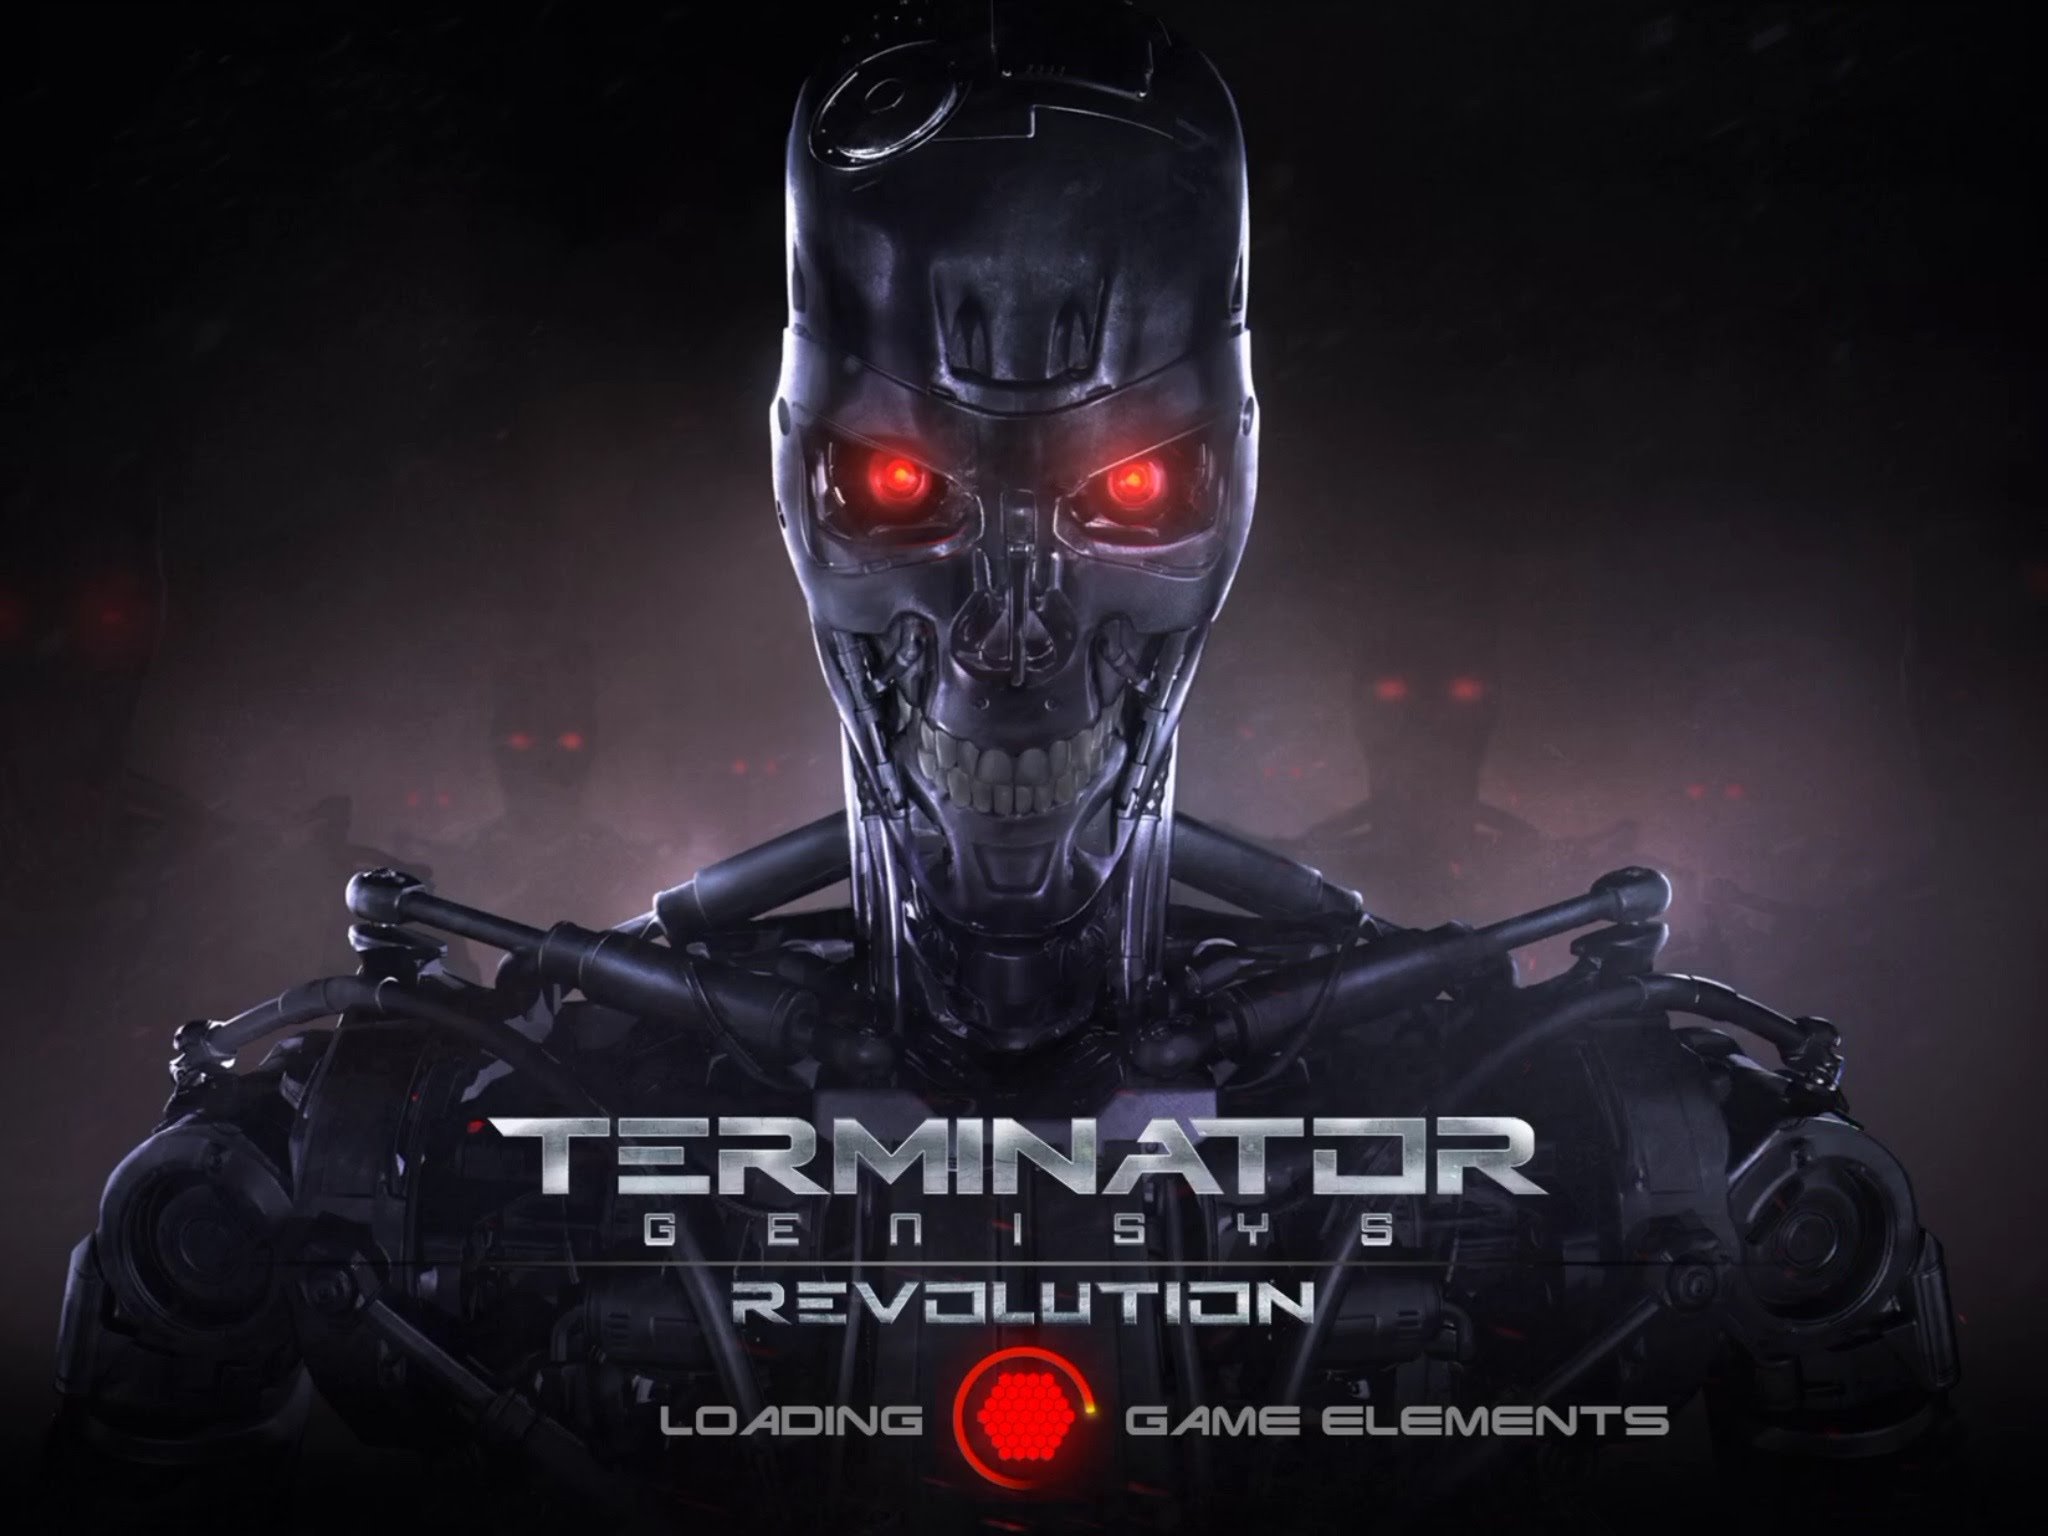 terminator 3 free online